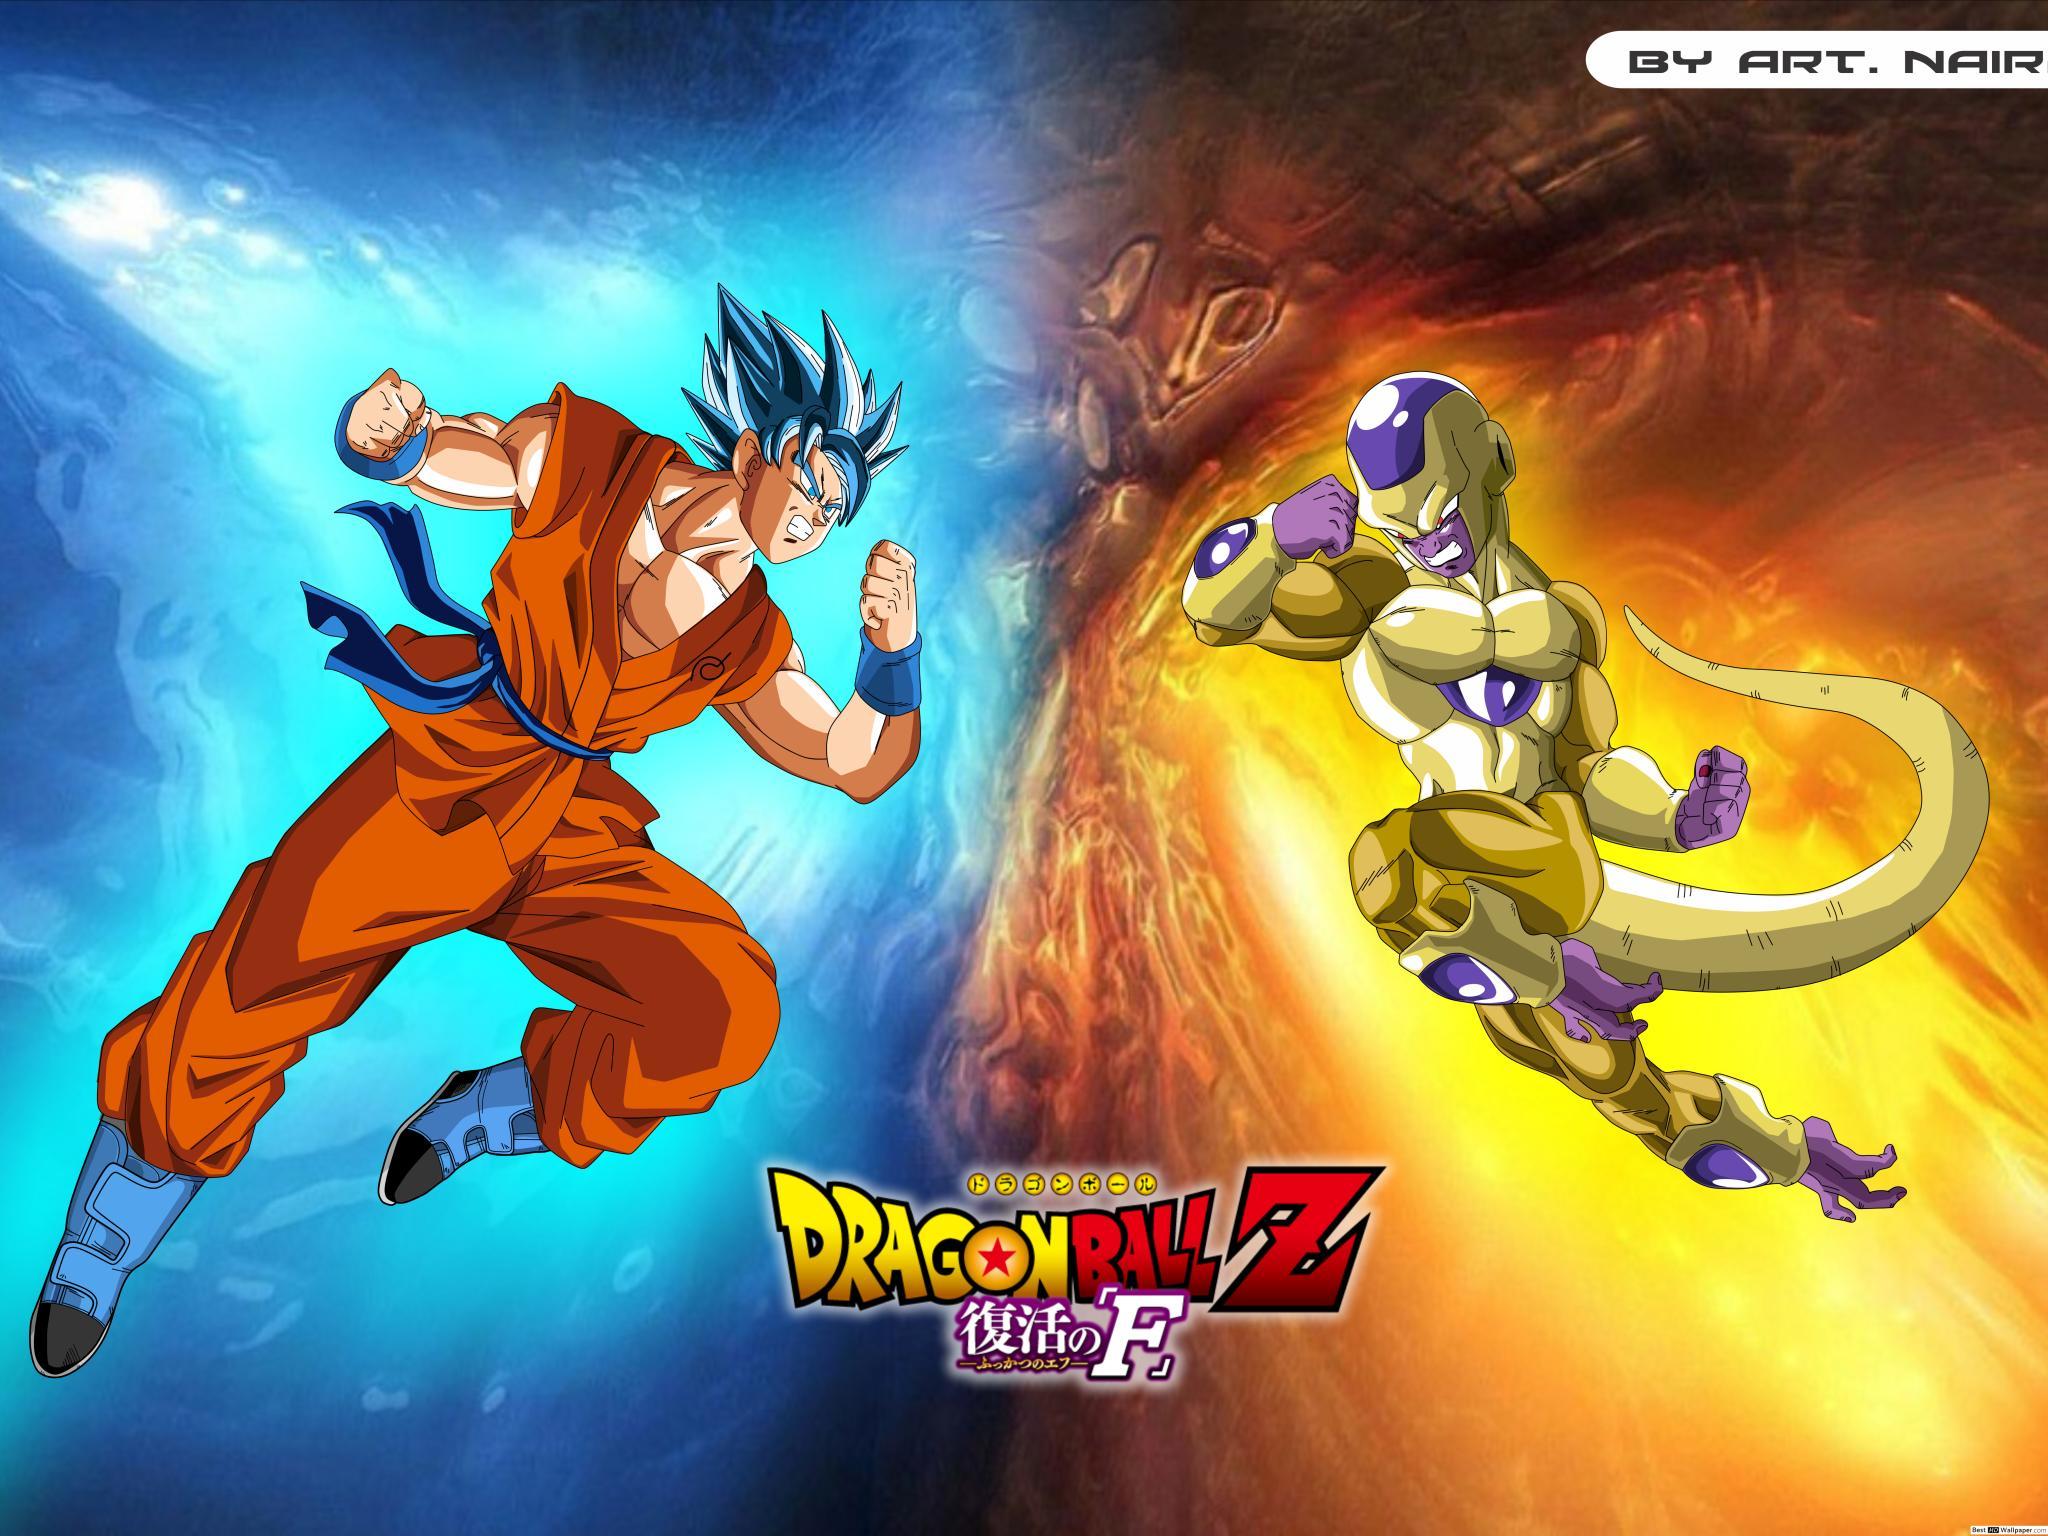 Dragon ball Z: The resurrection of Freeza HD wallpaper download